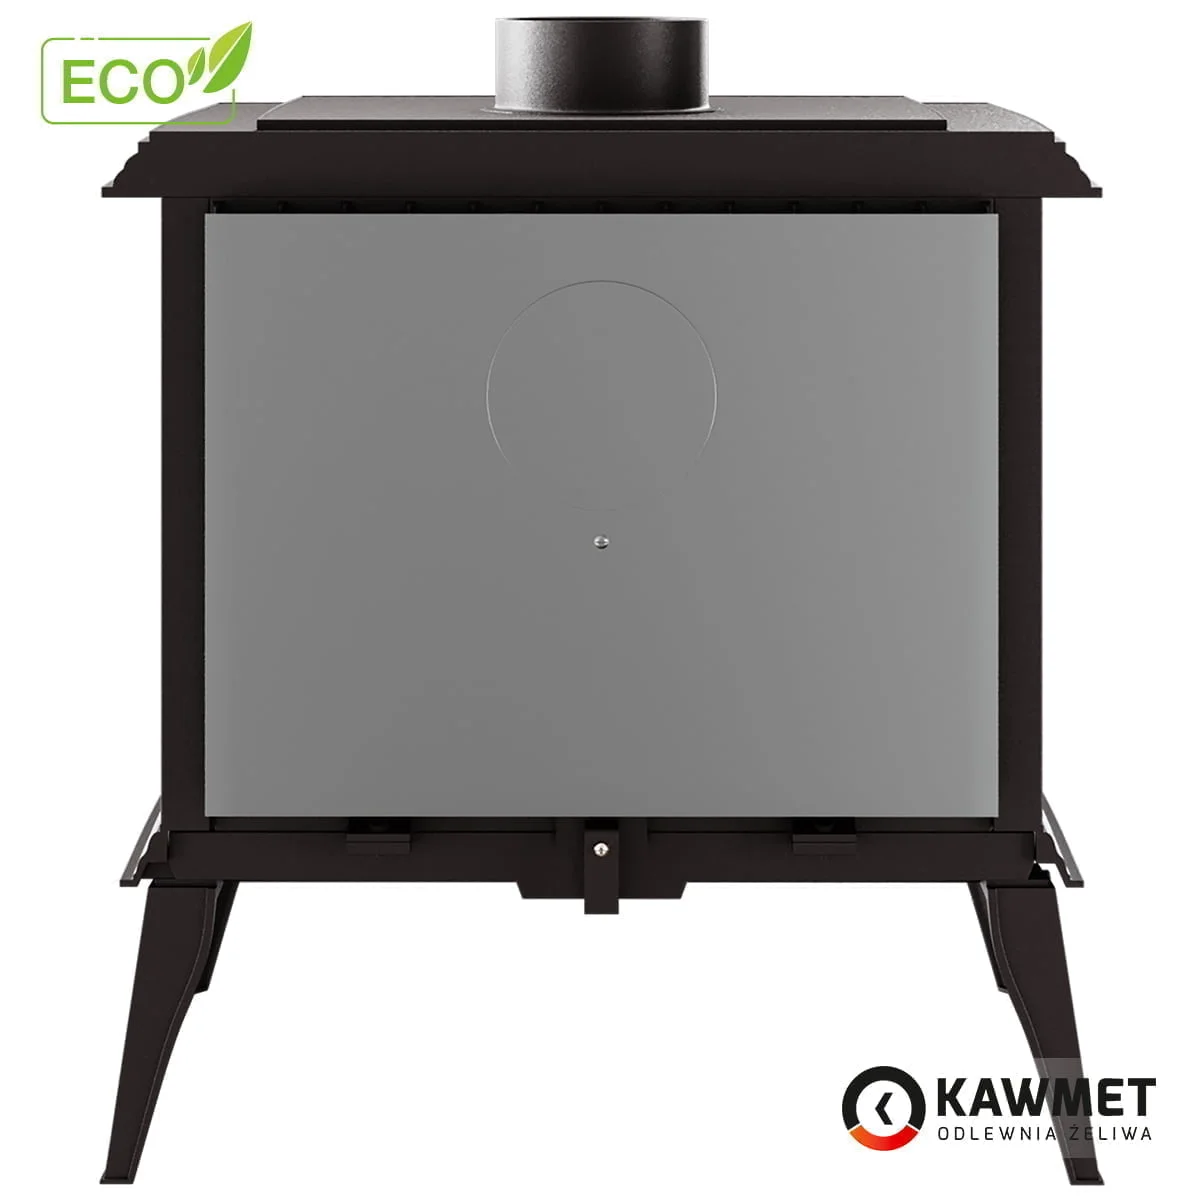 Wood burning stove KAWMET Premium PROMETEUS S11 ECO (7)